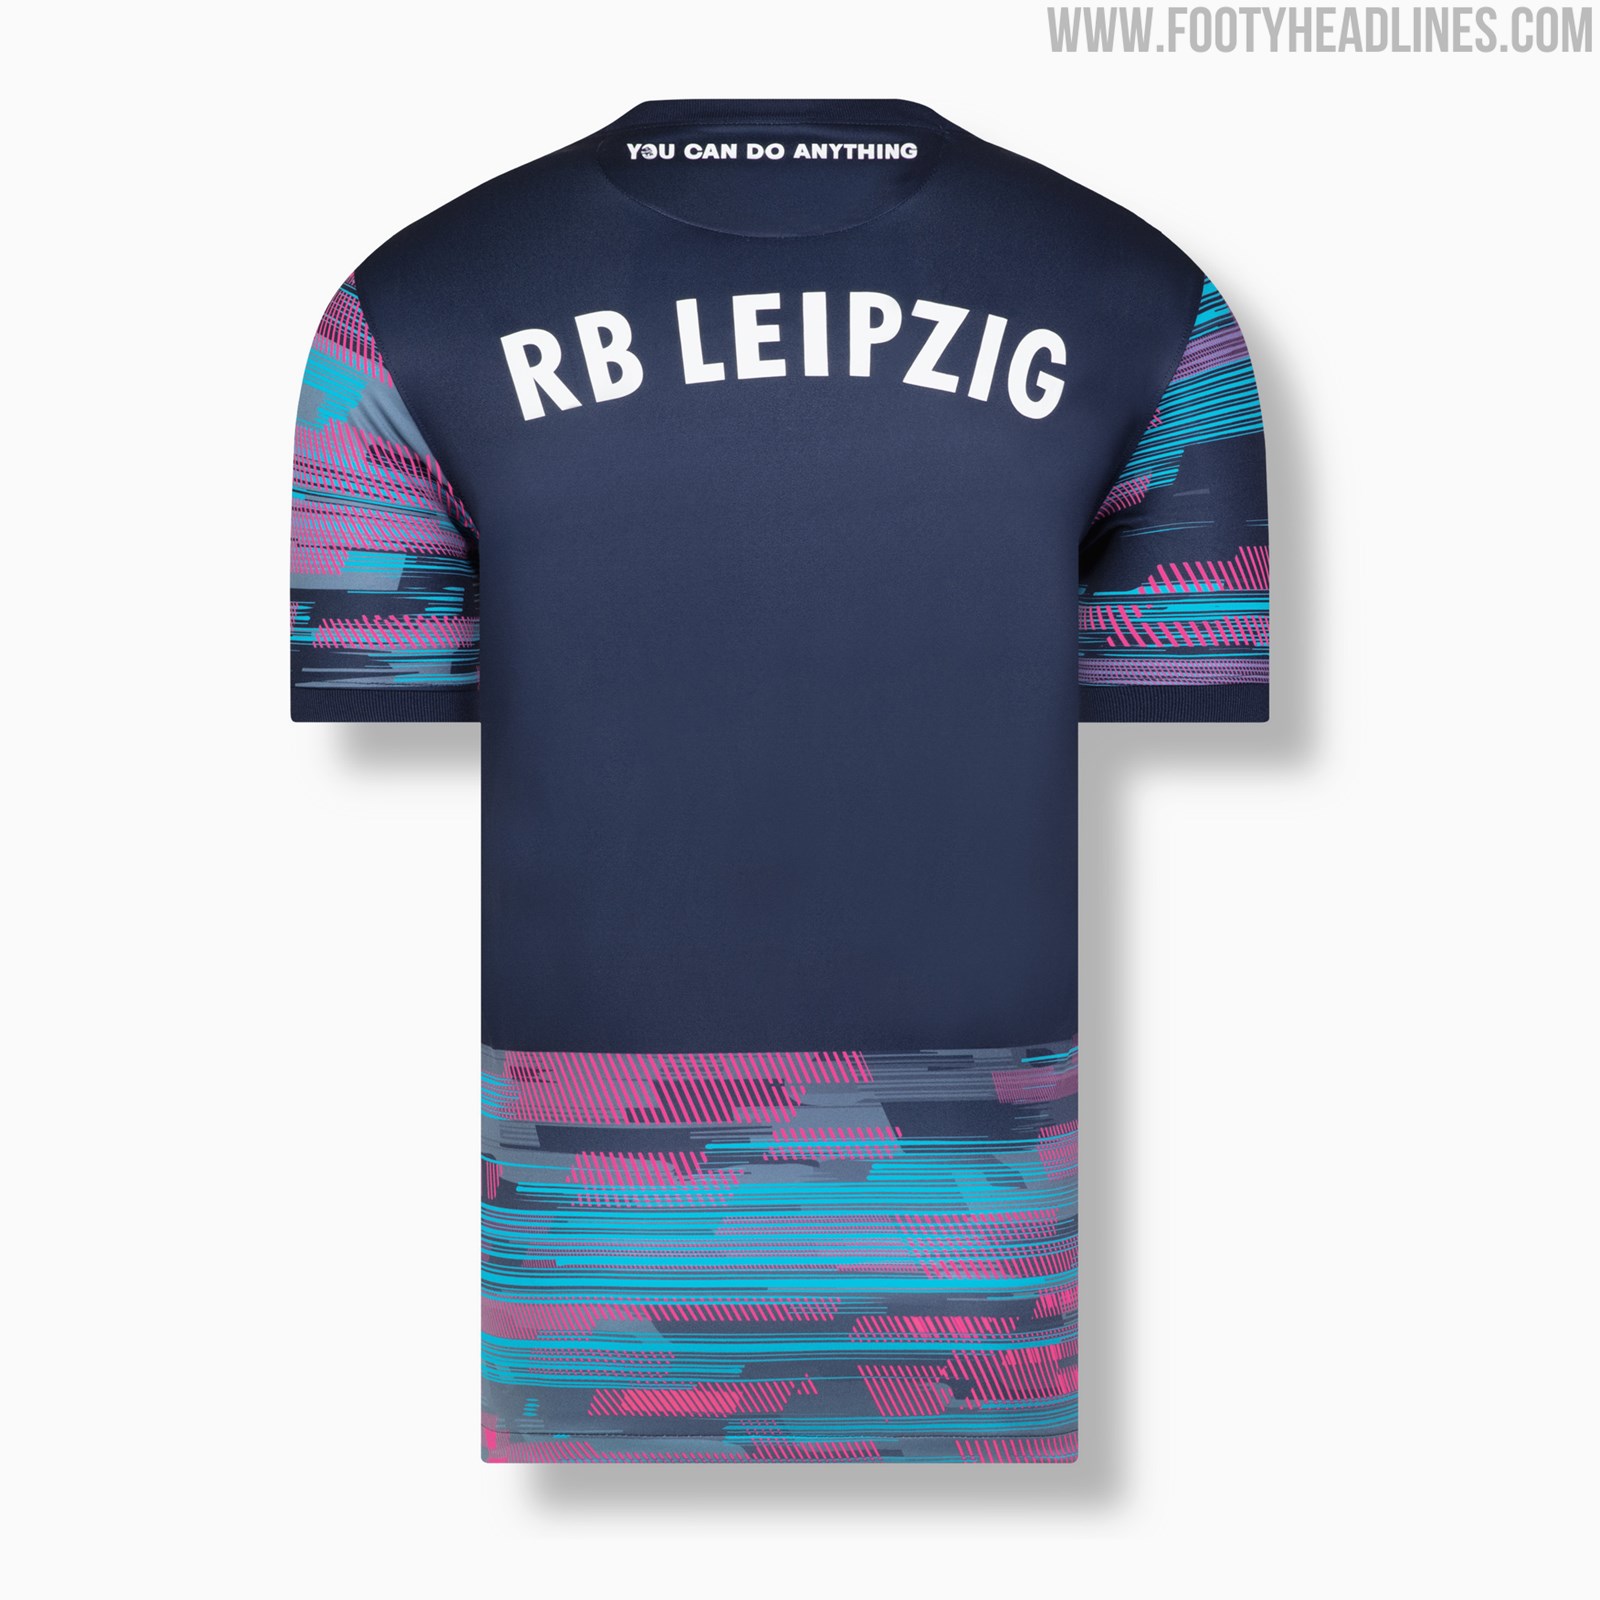 RB Leipzig 22-23 Third Kit Info Leaked - Footy Headlines